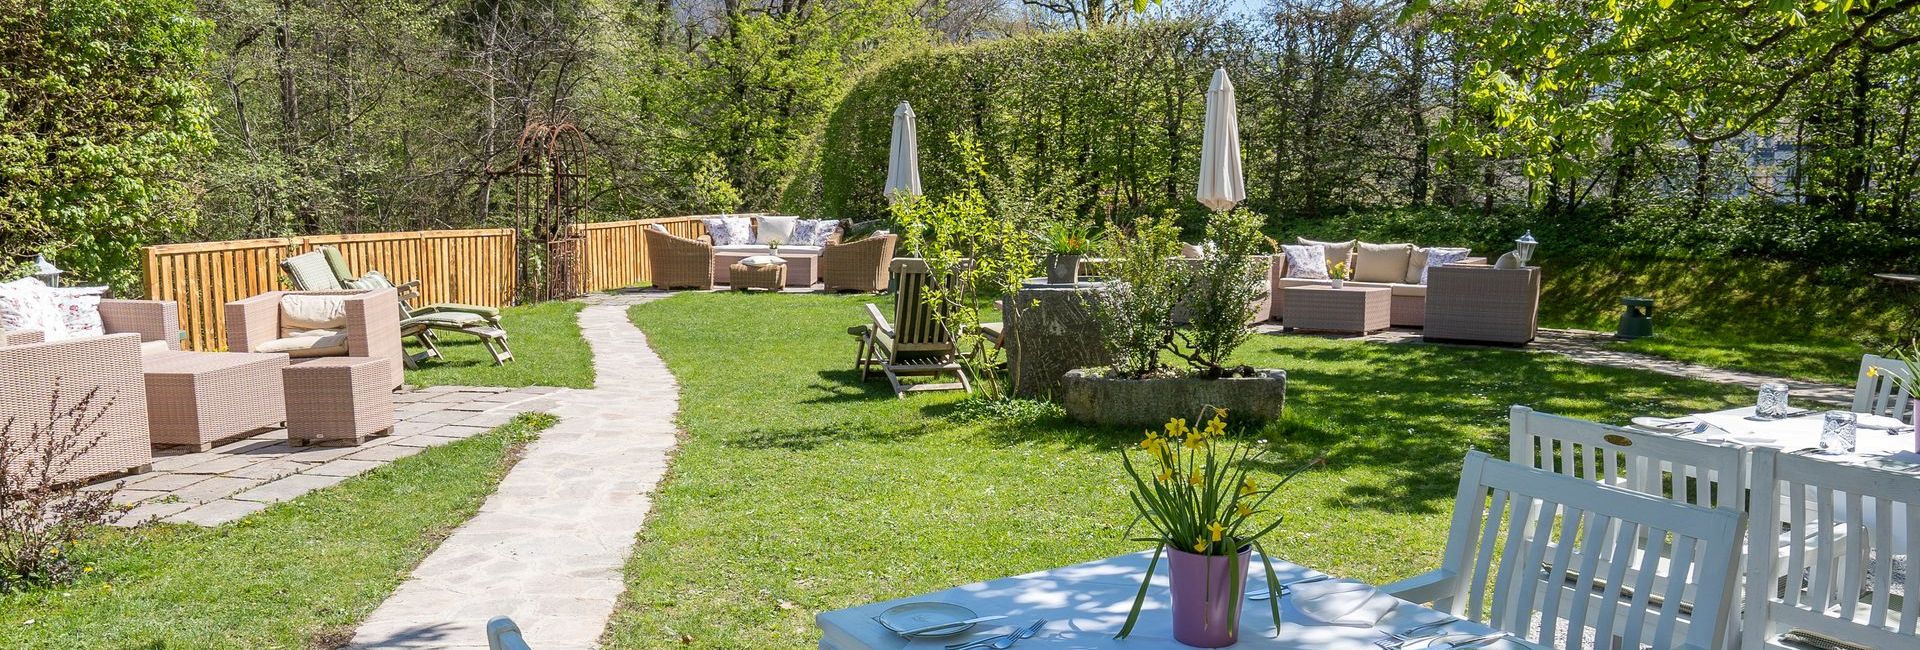 Garden with comfortable lounge chairs at Schlosswirt zu Anif near Salzburg